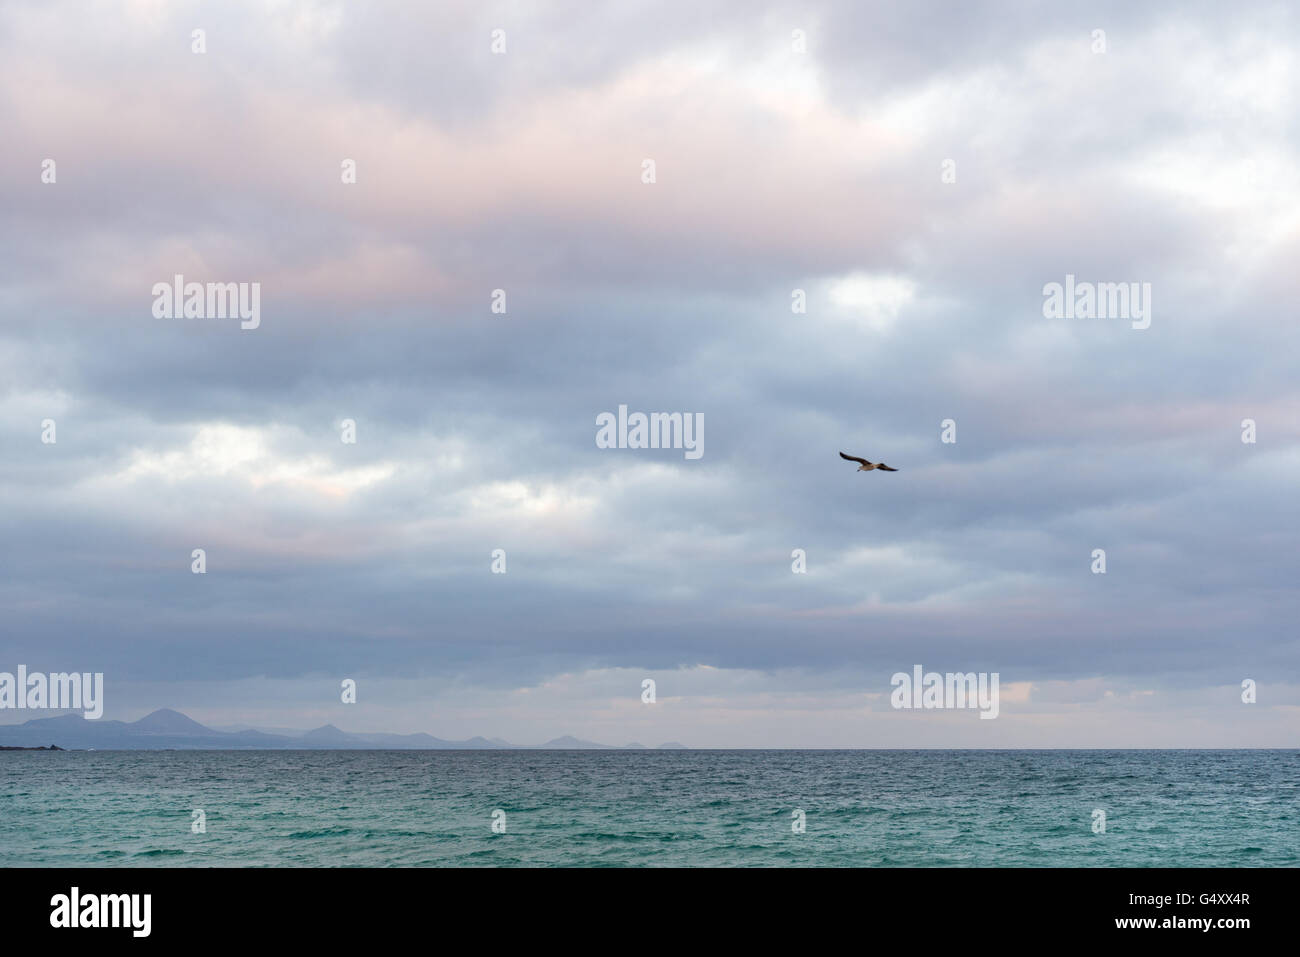 Spain, Canary Islands, Fuerteventura, A gull flies through the evening sky on the Spanish island of Fuerteventura Stock Photo